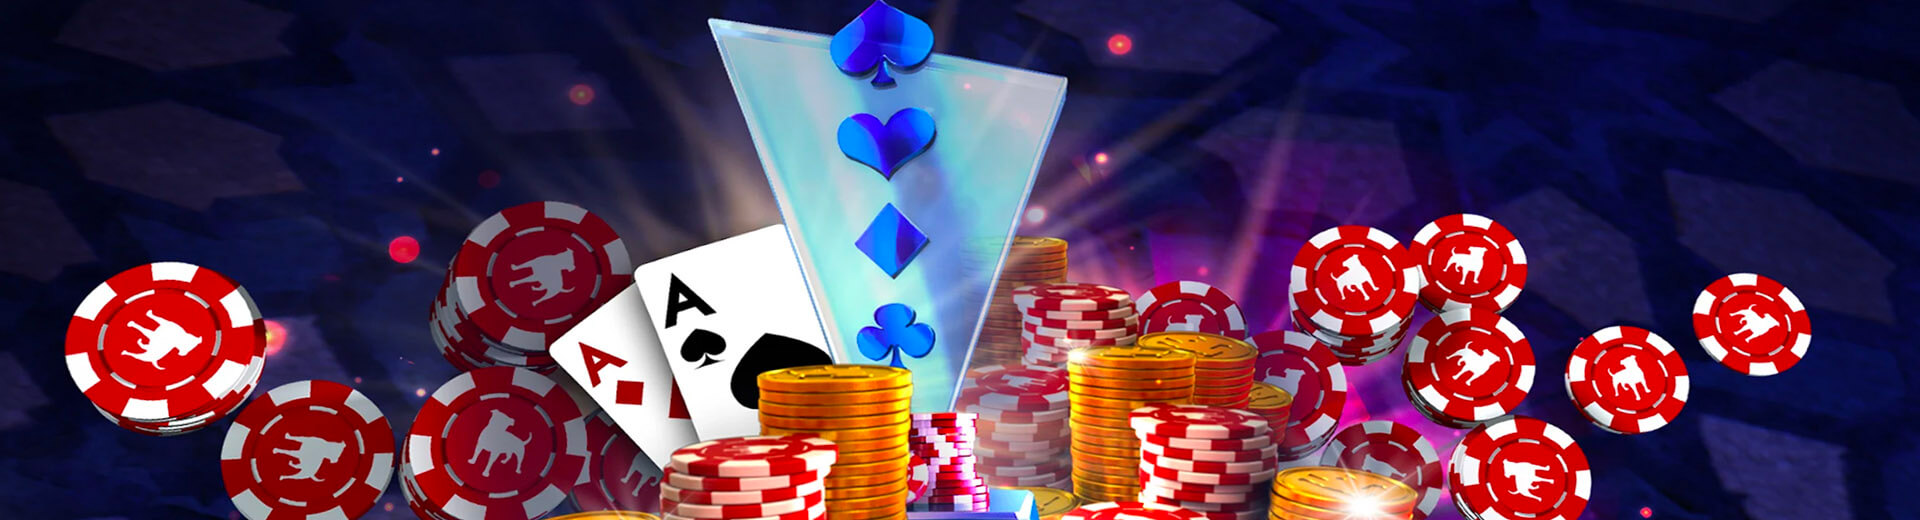 Casino token bonus codes free online slots: 600 free slots